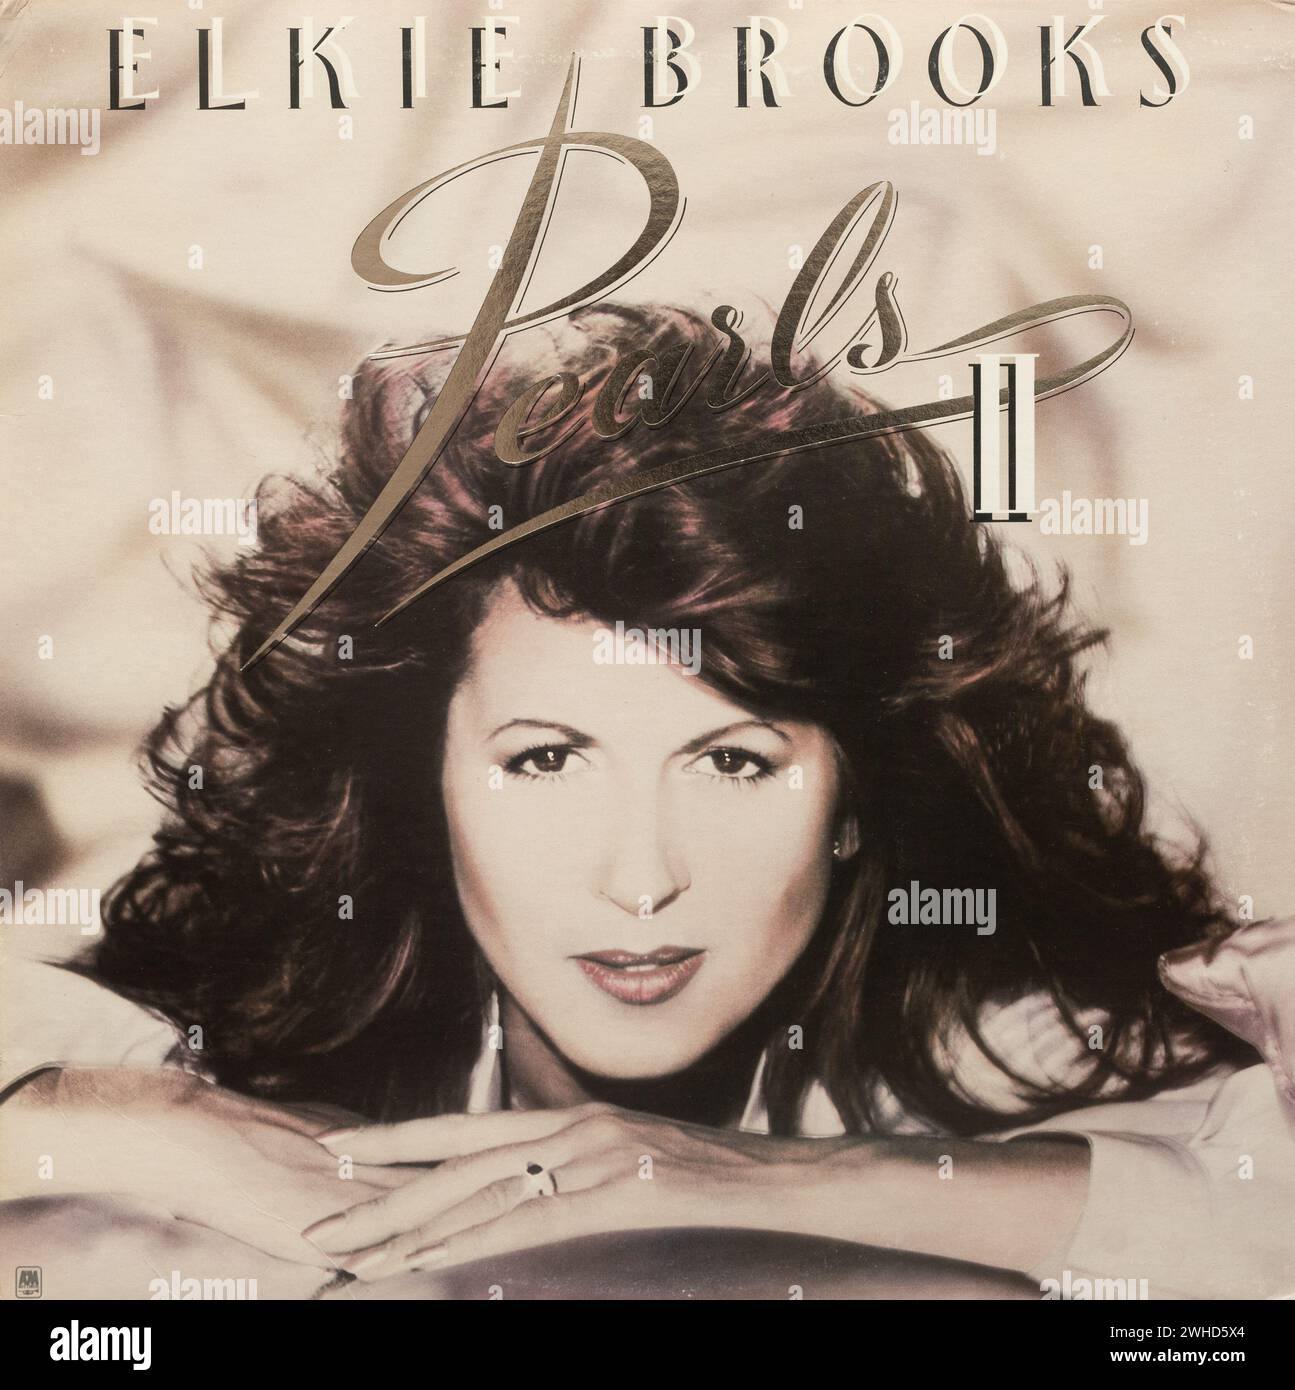 Elkie Brooks Pearls II vinyl LP record album cover Stock Photo